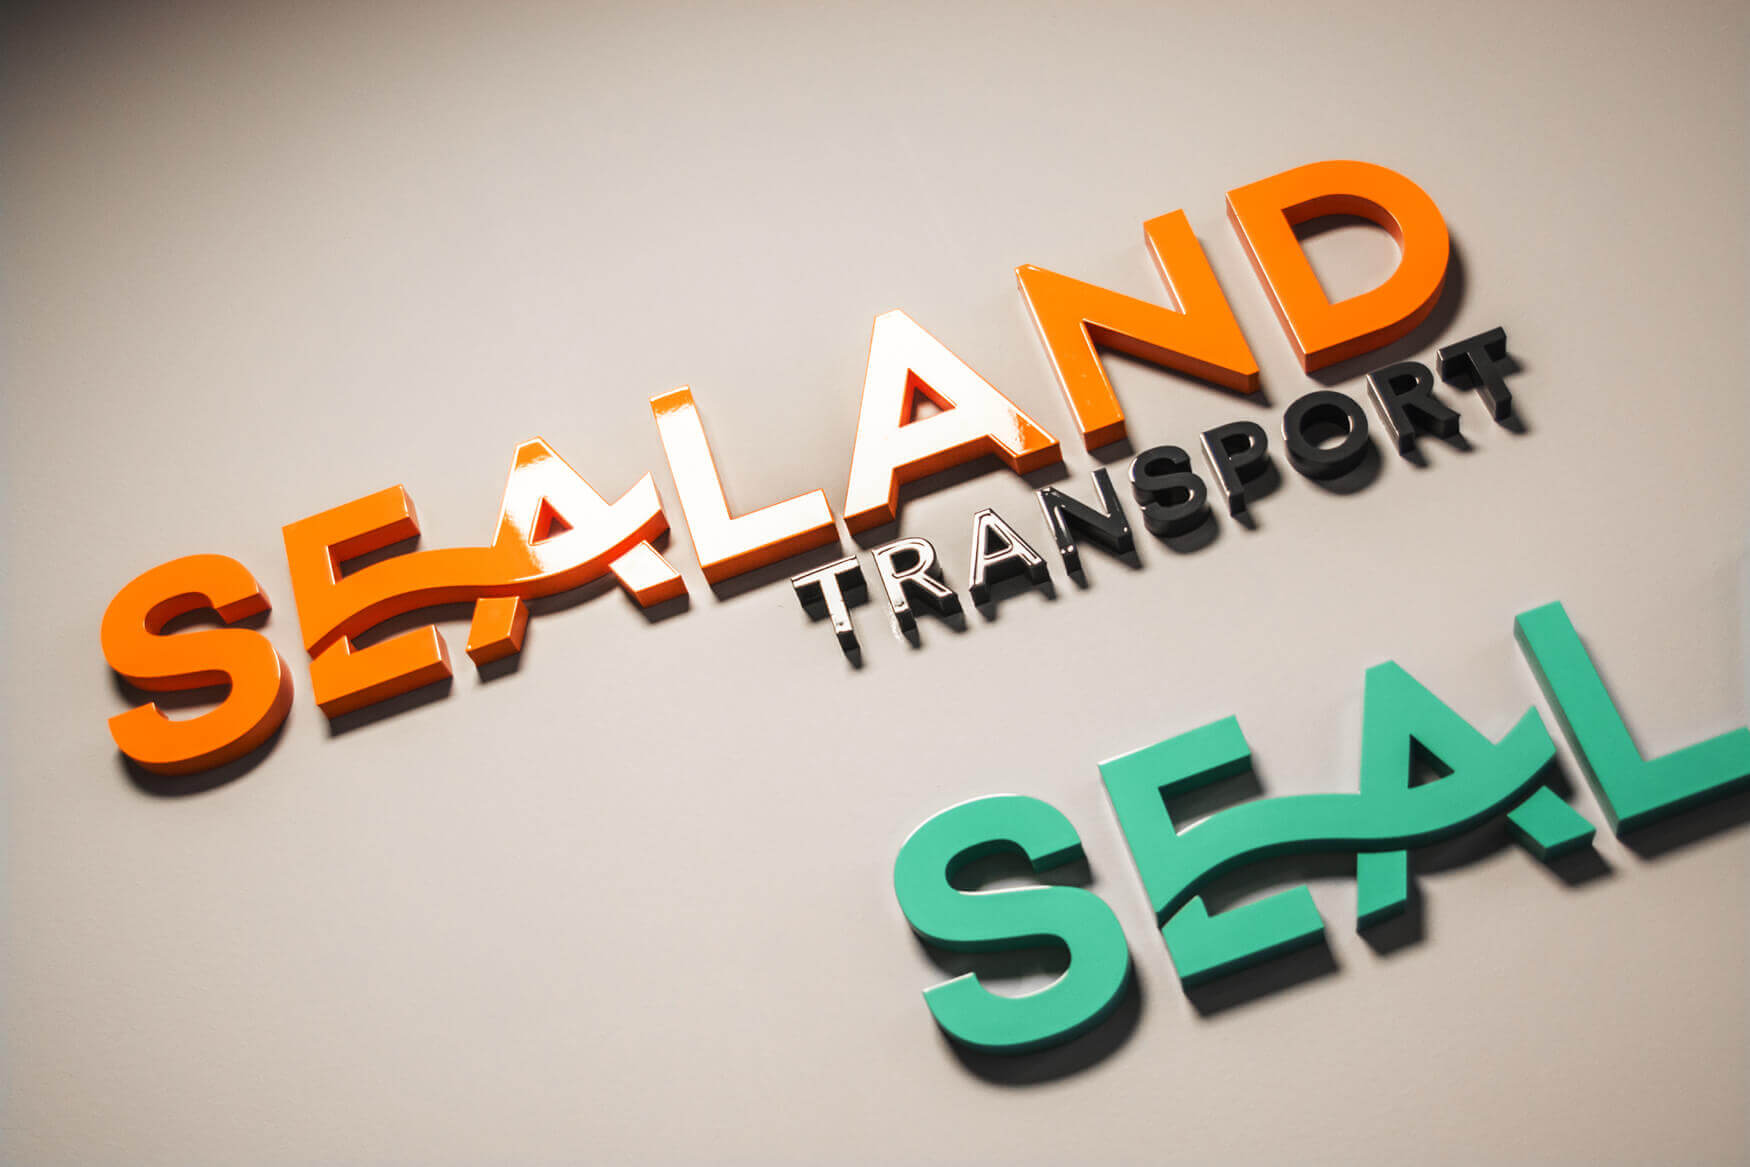 Sealand - Sealand - Letras en bloque 3D colocadas en la pared pintadas con spray